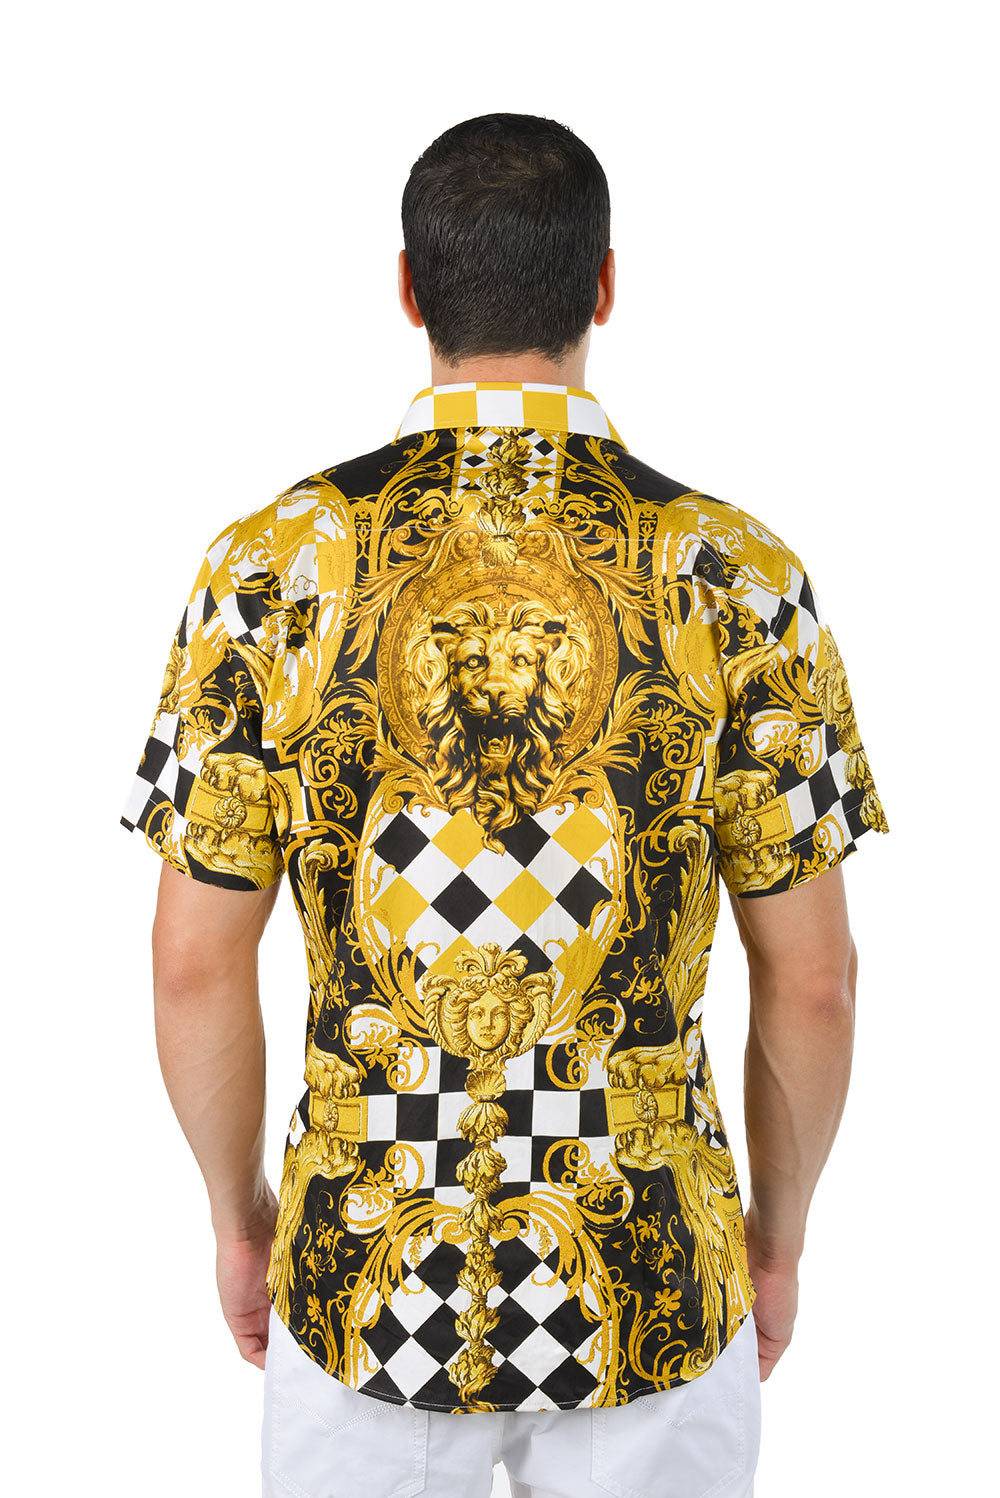 Barabas Men's Baroque Checkered Plaid Short Sleeve Shirts SS20 Gold